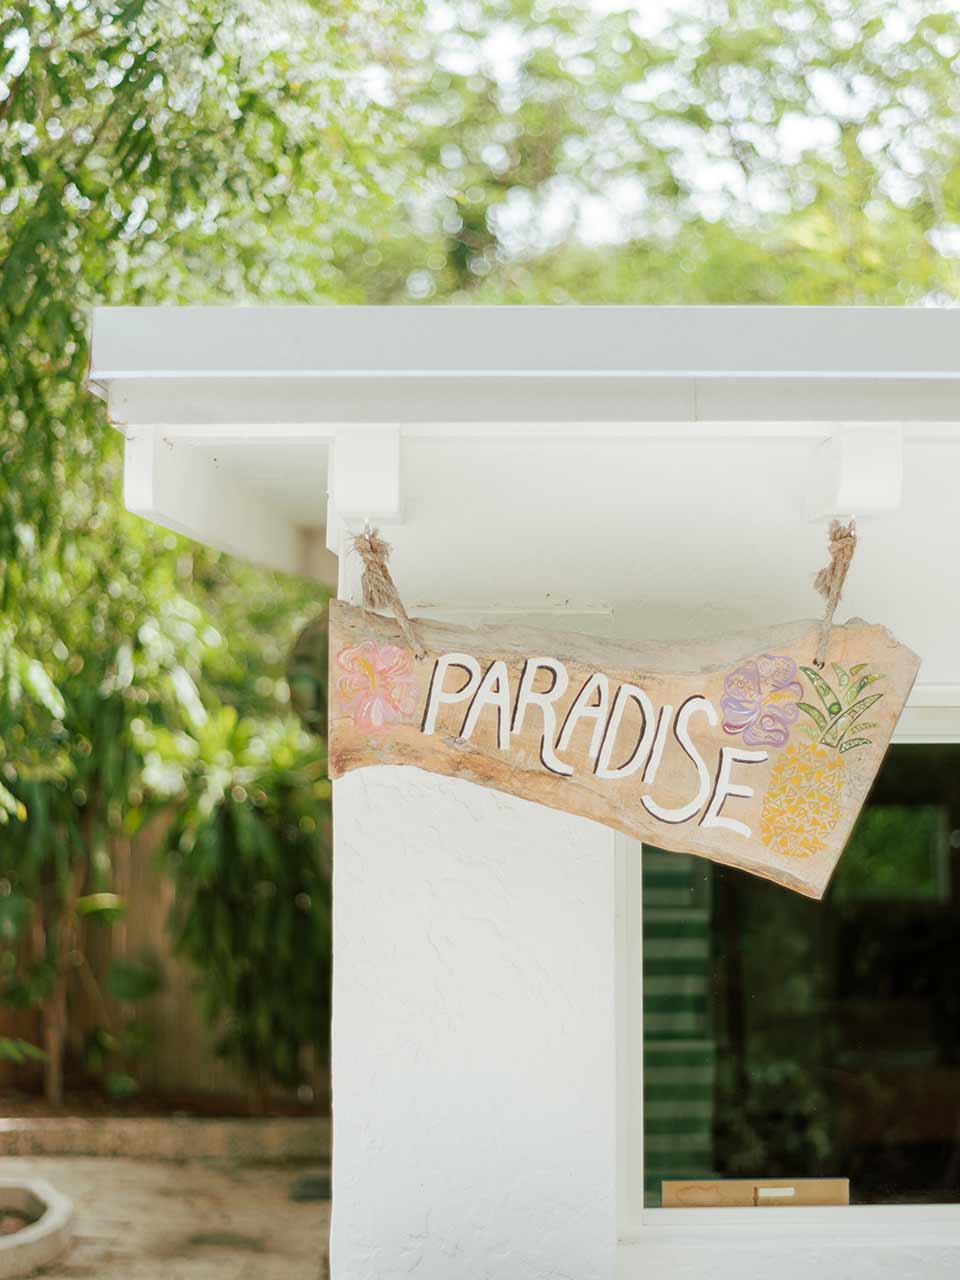 Paradise Bungalow exterior sign - Largo Resort